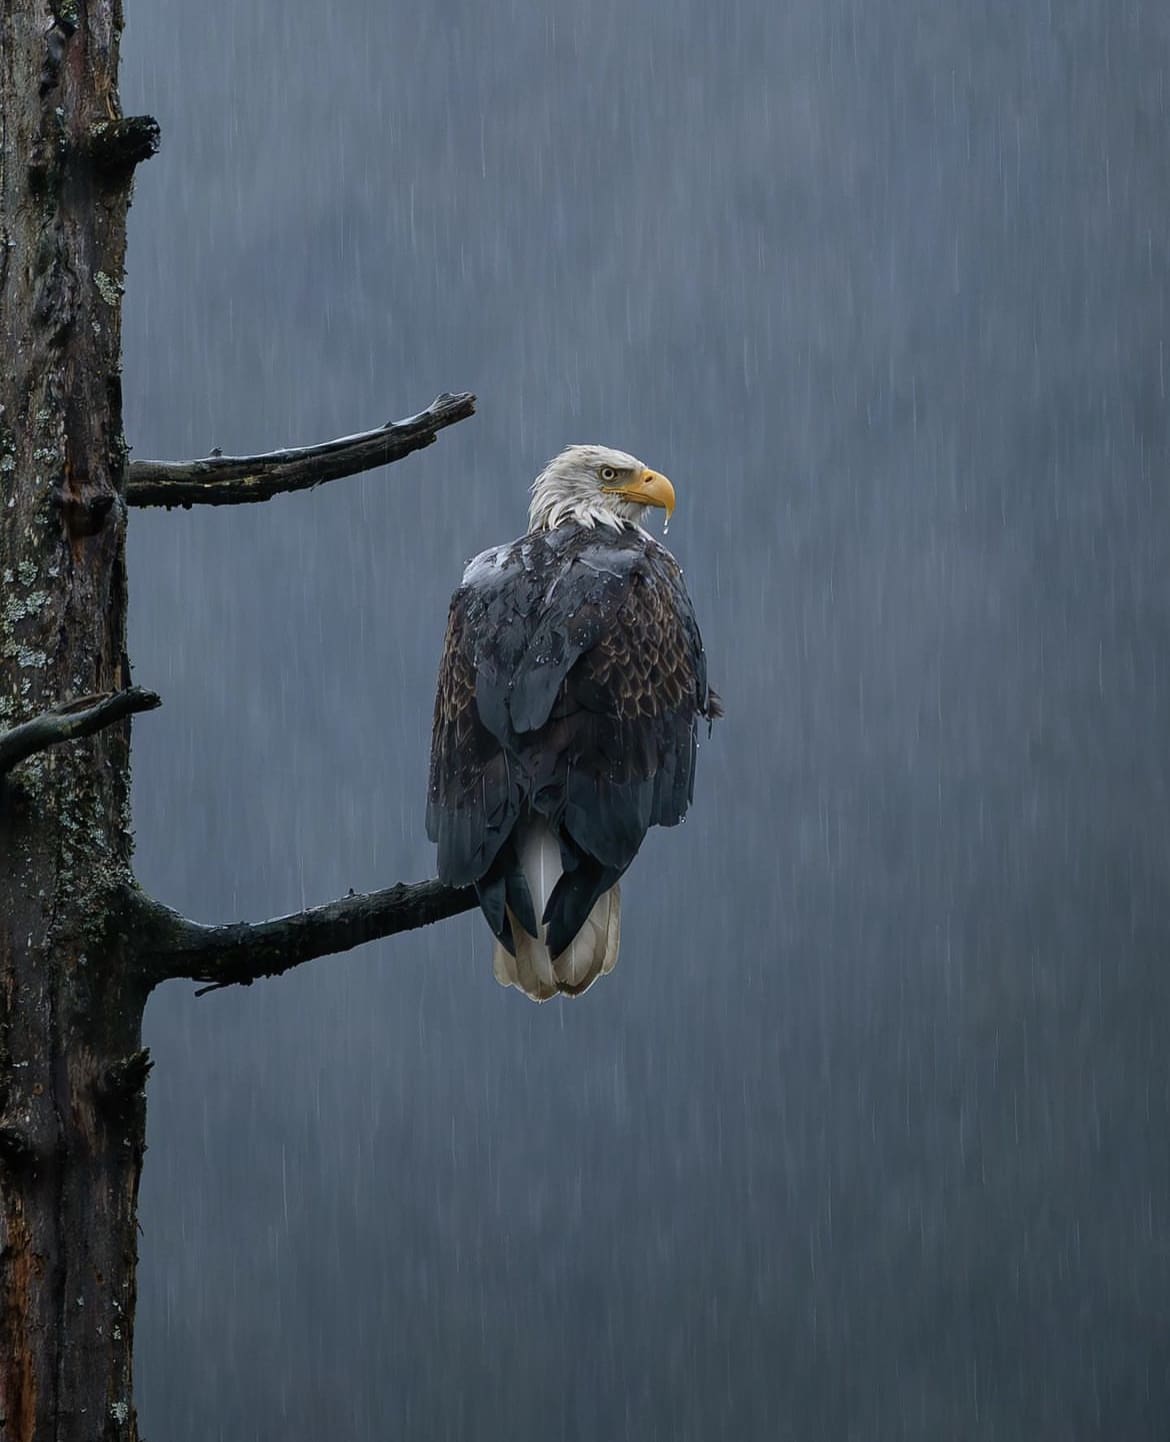 Very rainy day in Alaska - wildlife photography